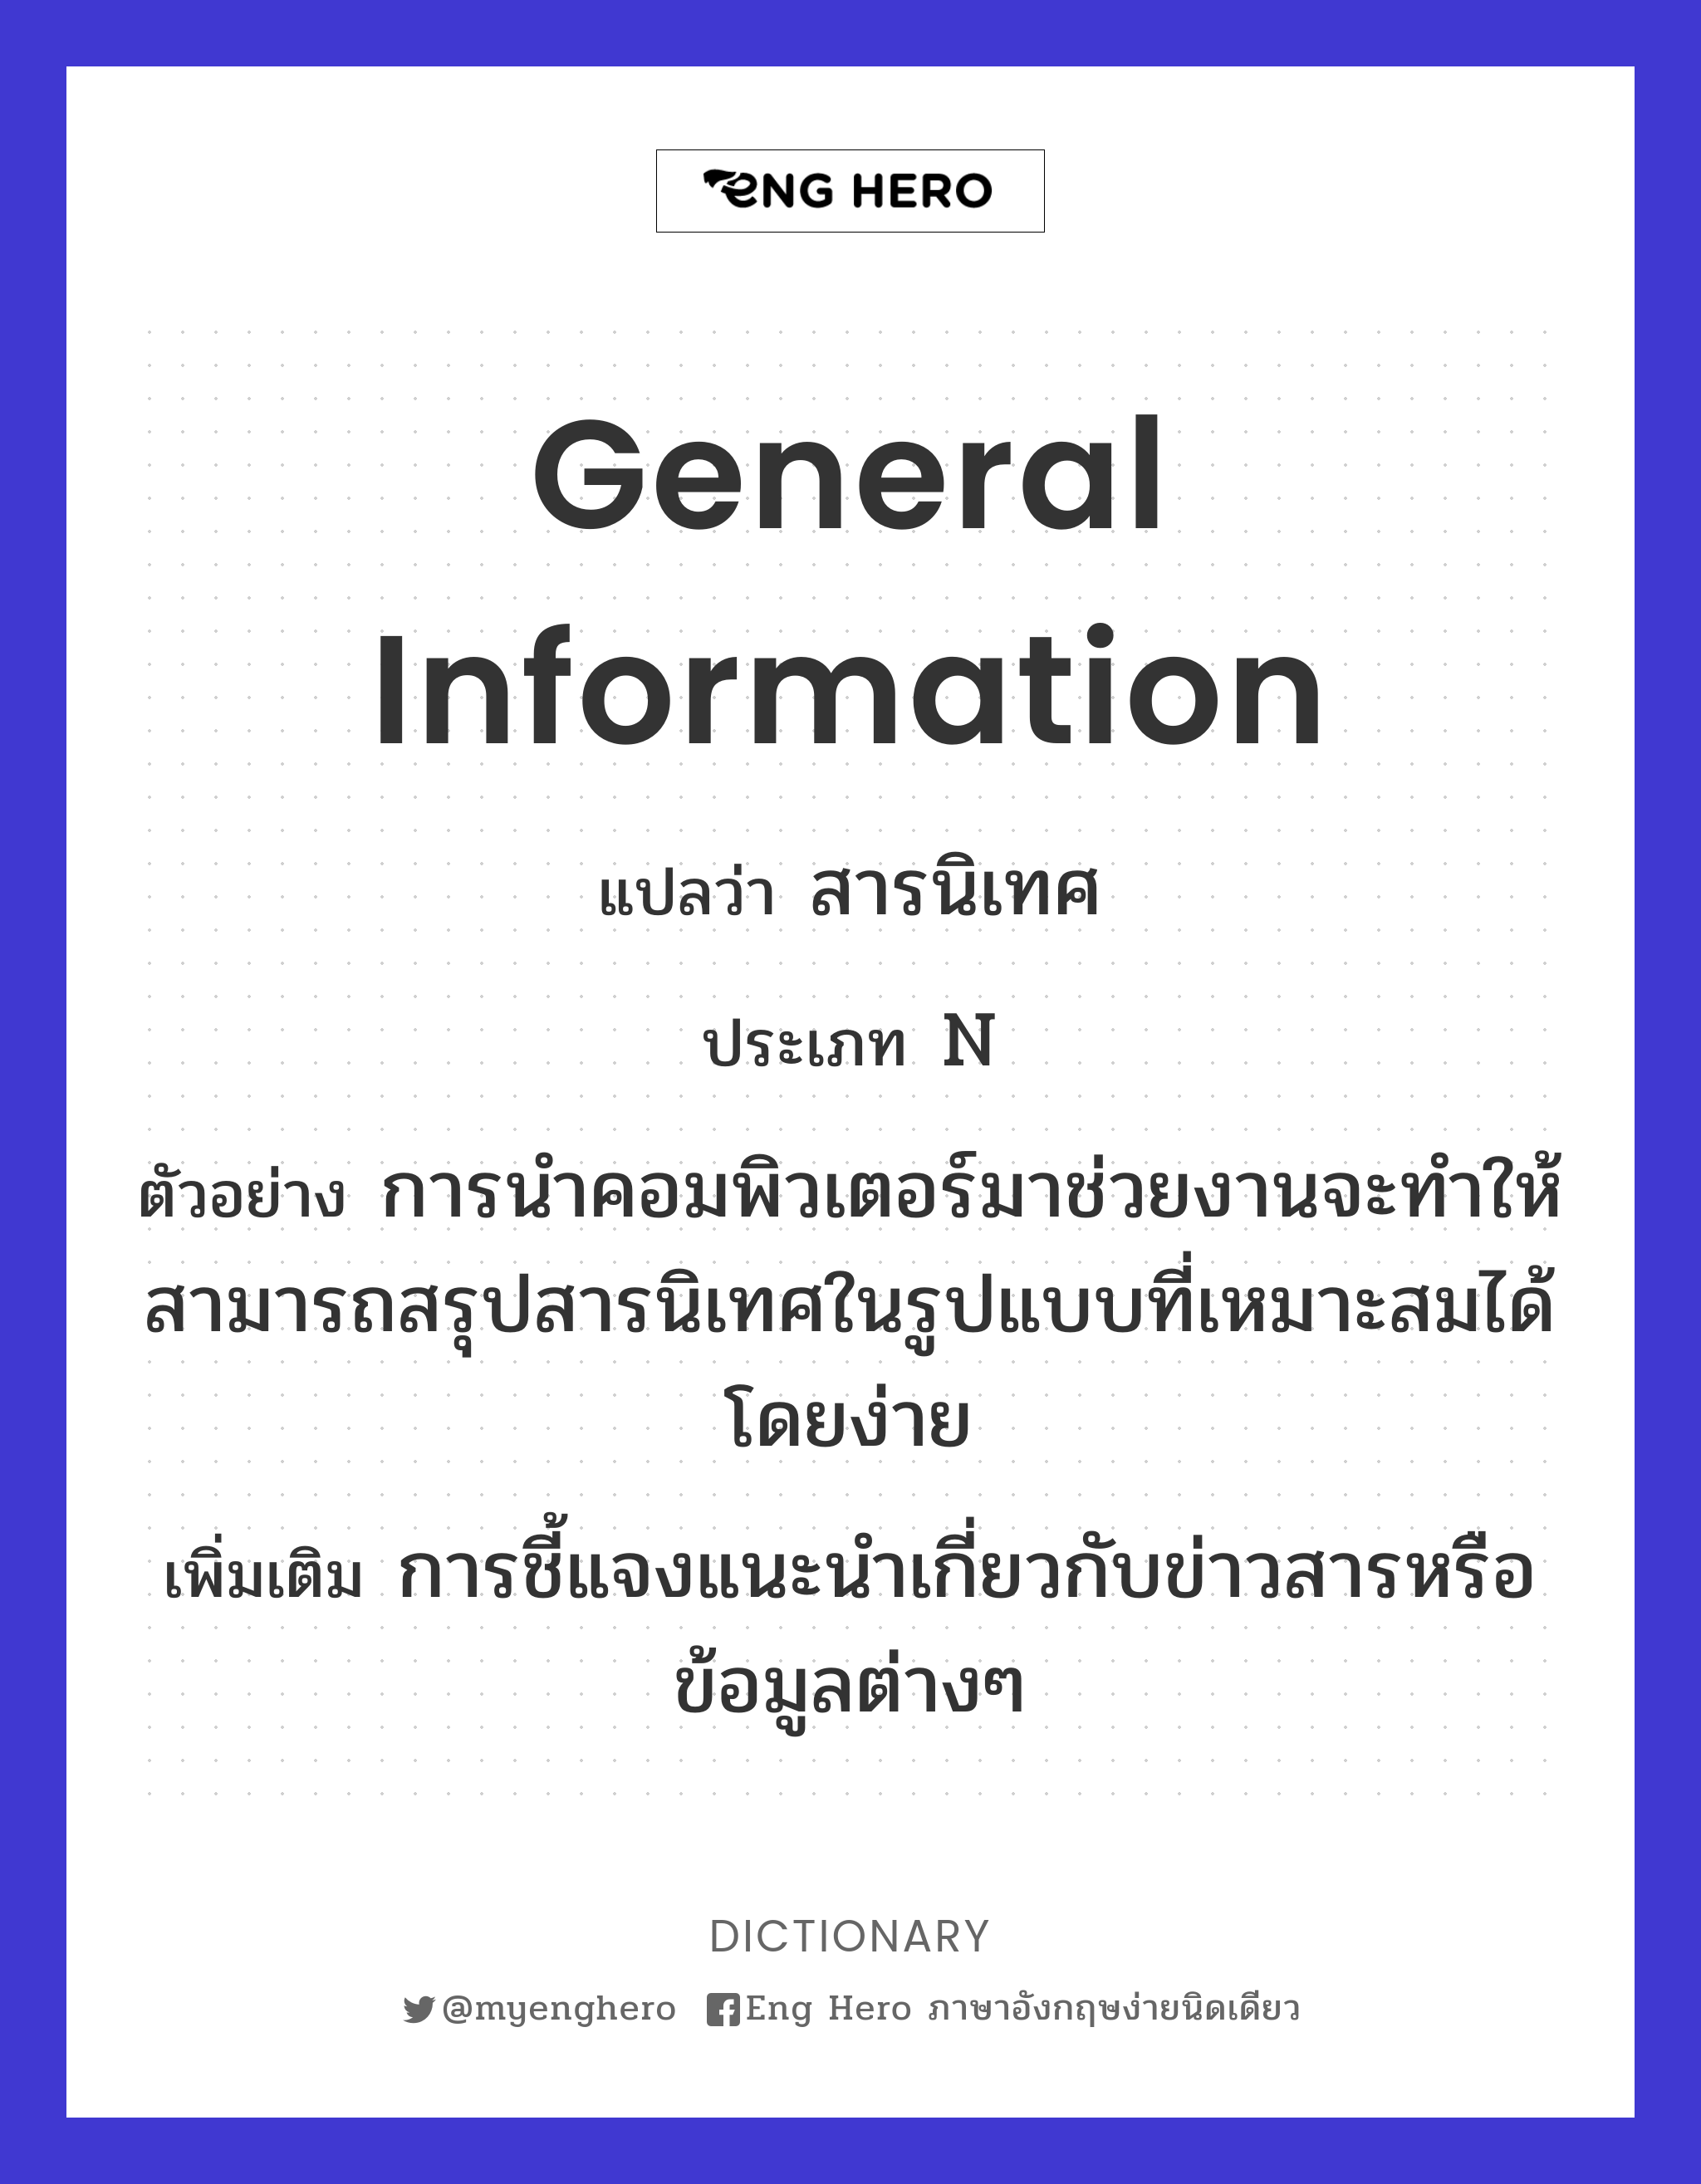 general information